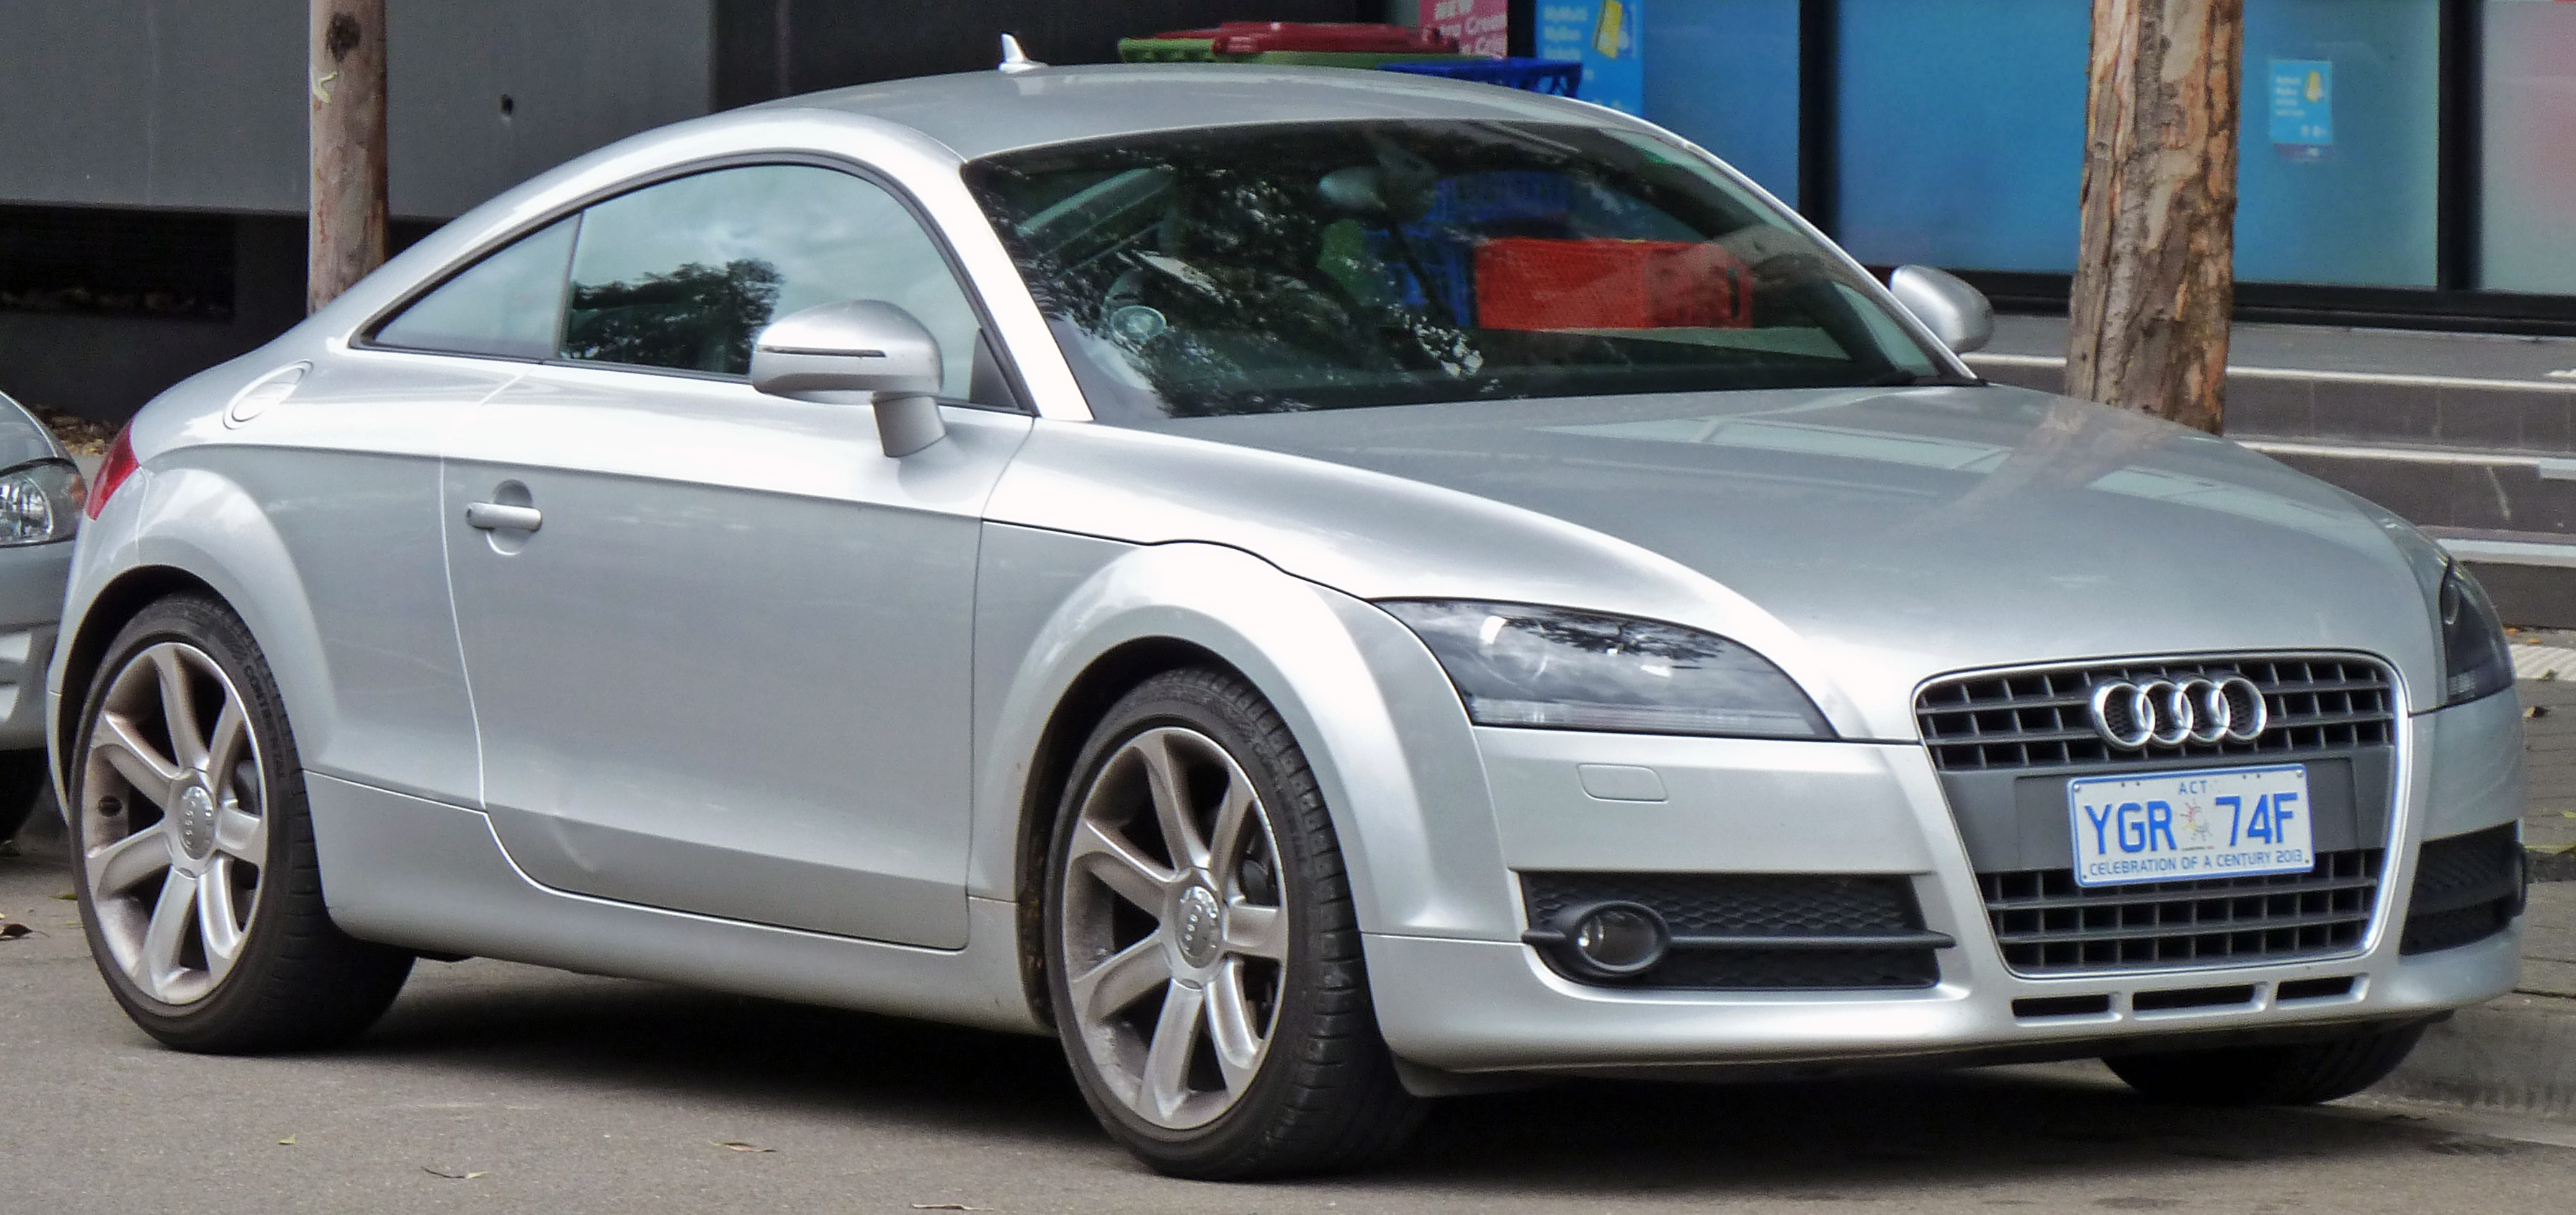 File:2007 Audi TT (8J) 2.0 TFSI coupe (2010-07-10) 01.jpg - Wikipedia